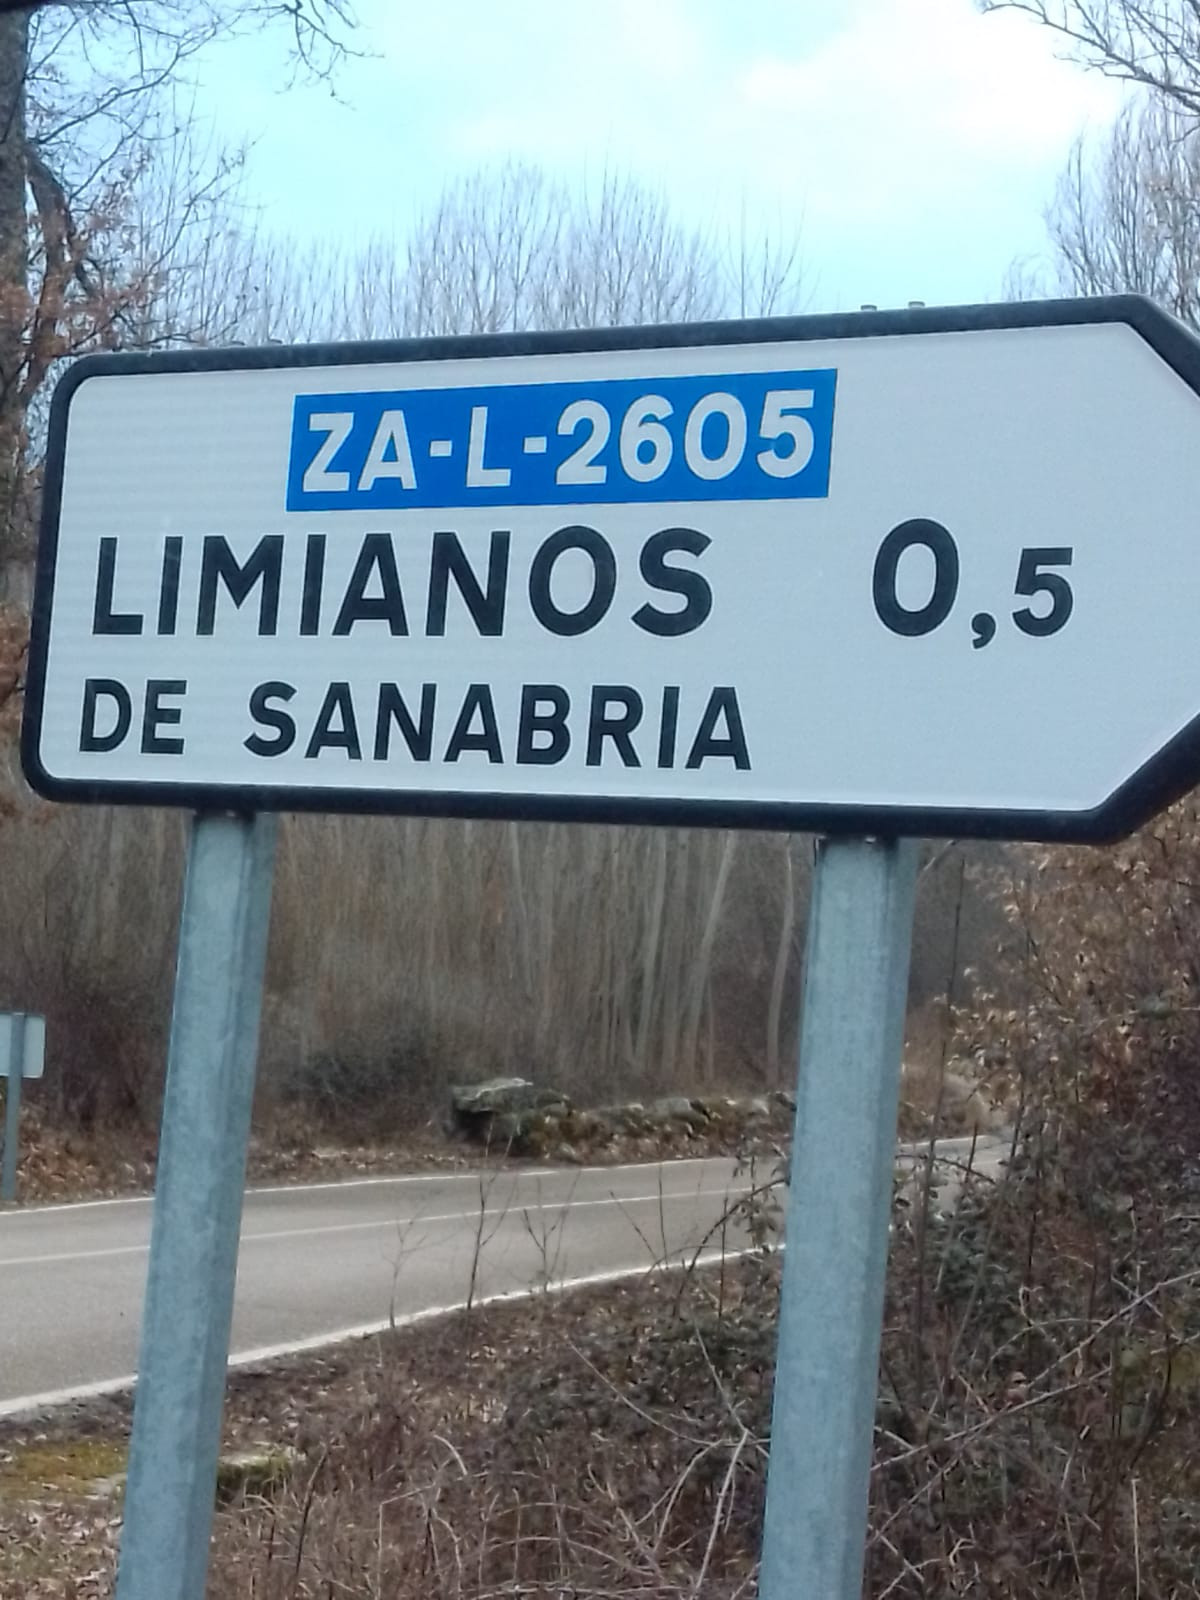 Limianos de Sanabria